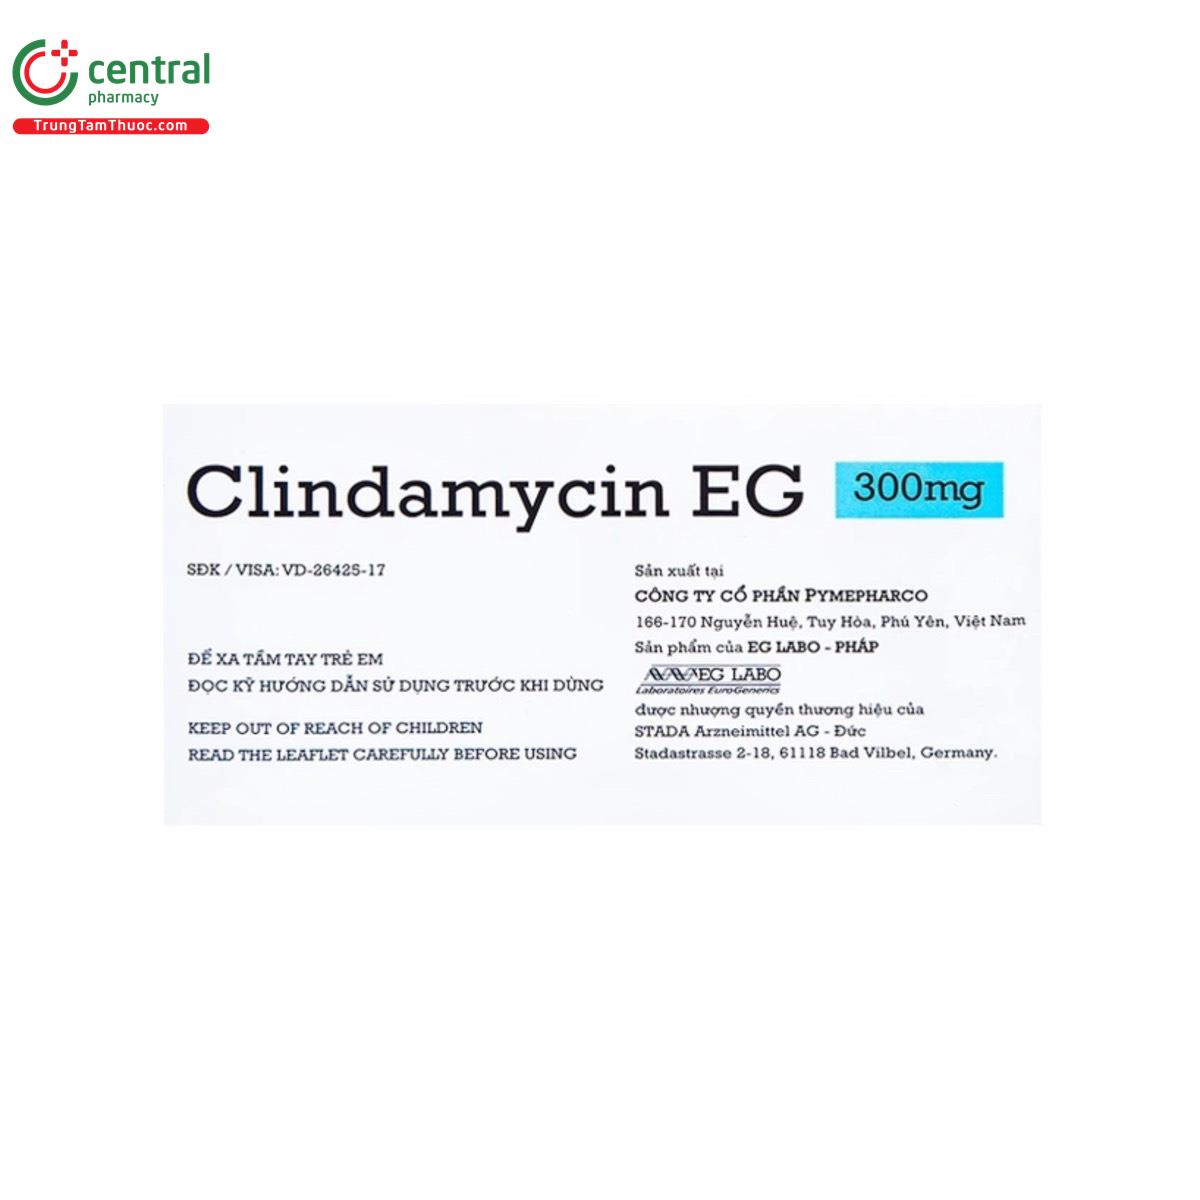 clindamycin eg 300mg 11 L4634